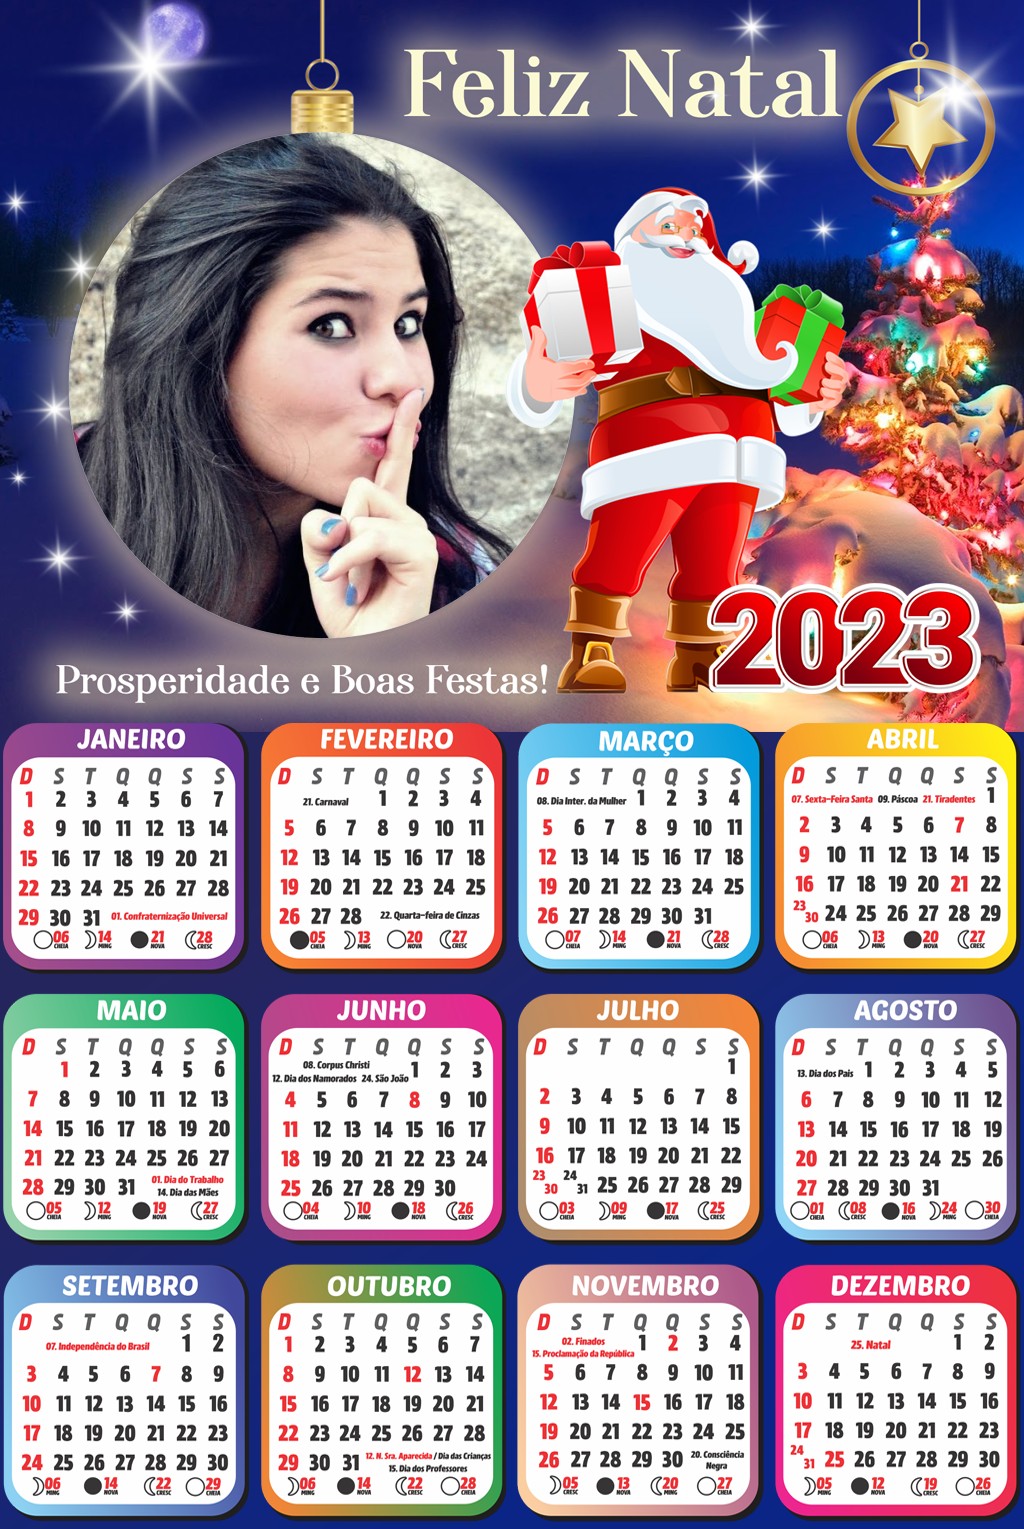 emoldurar-foto-calendario-2023-feliz-natal